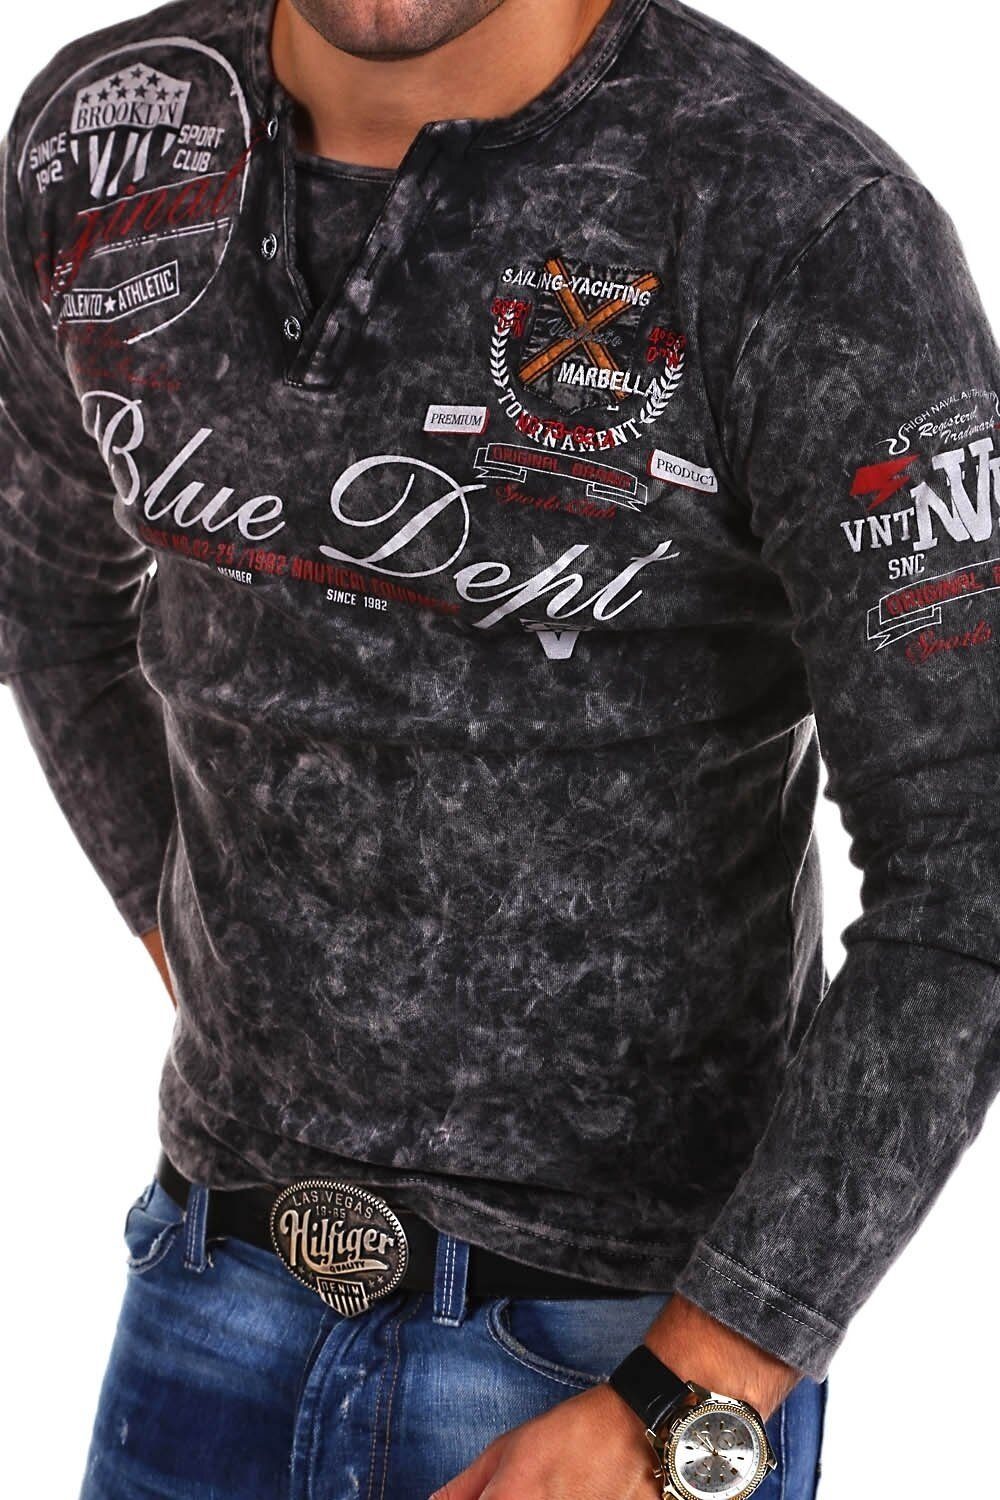 behype Langarmshirt VT-Blue mit ausgefallenem Print schwarz | Shirts